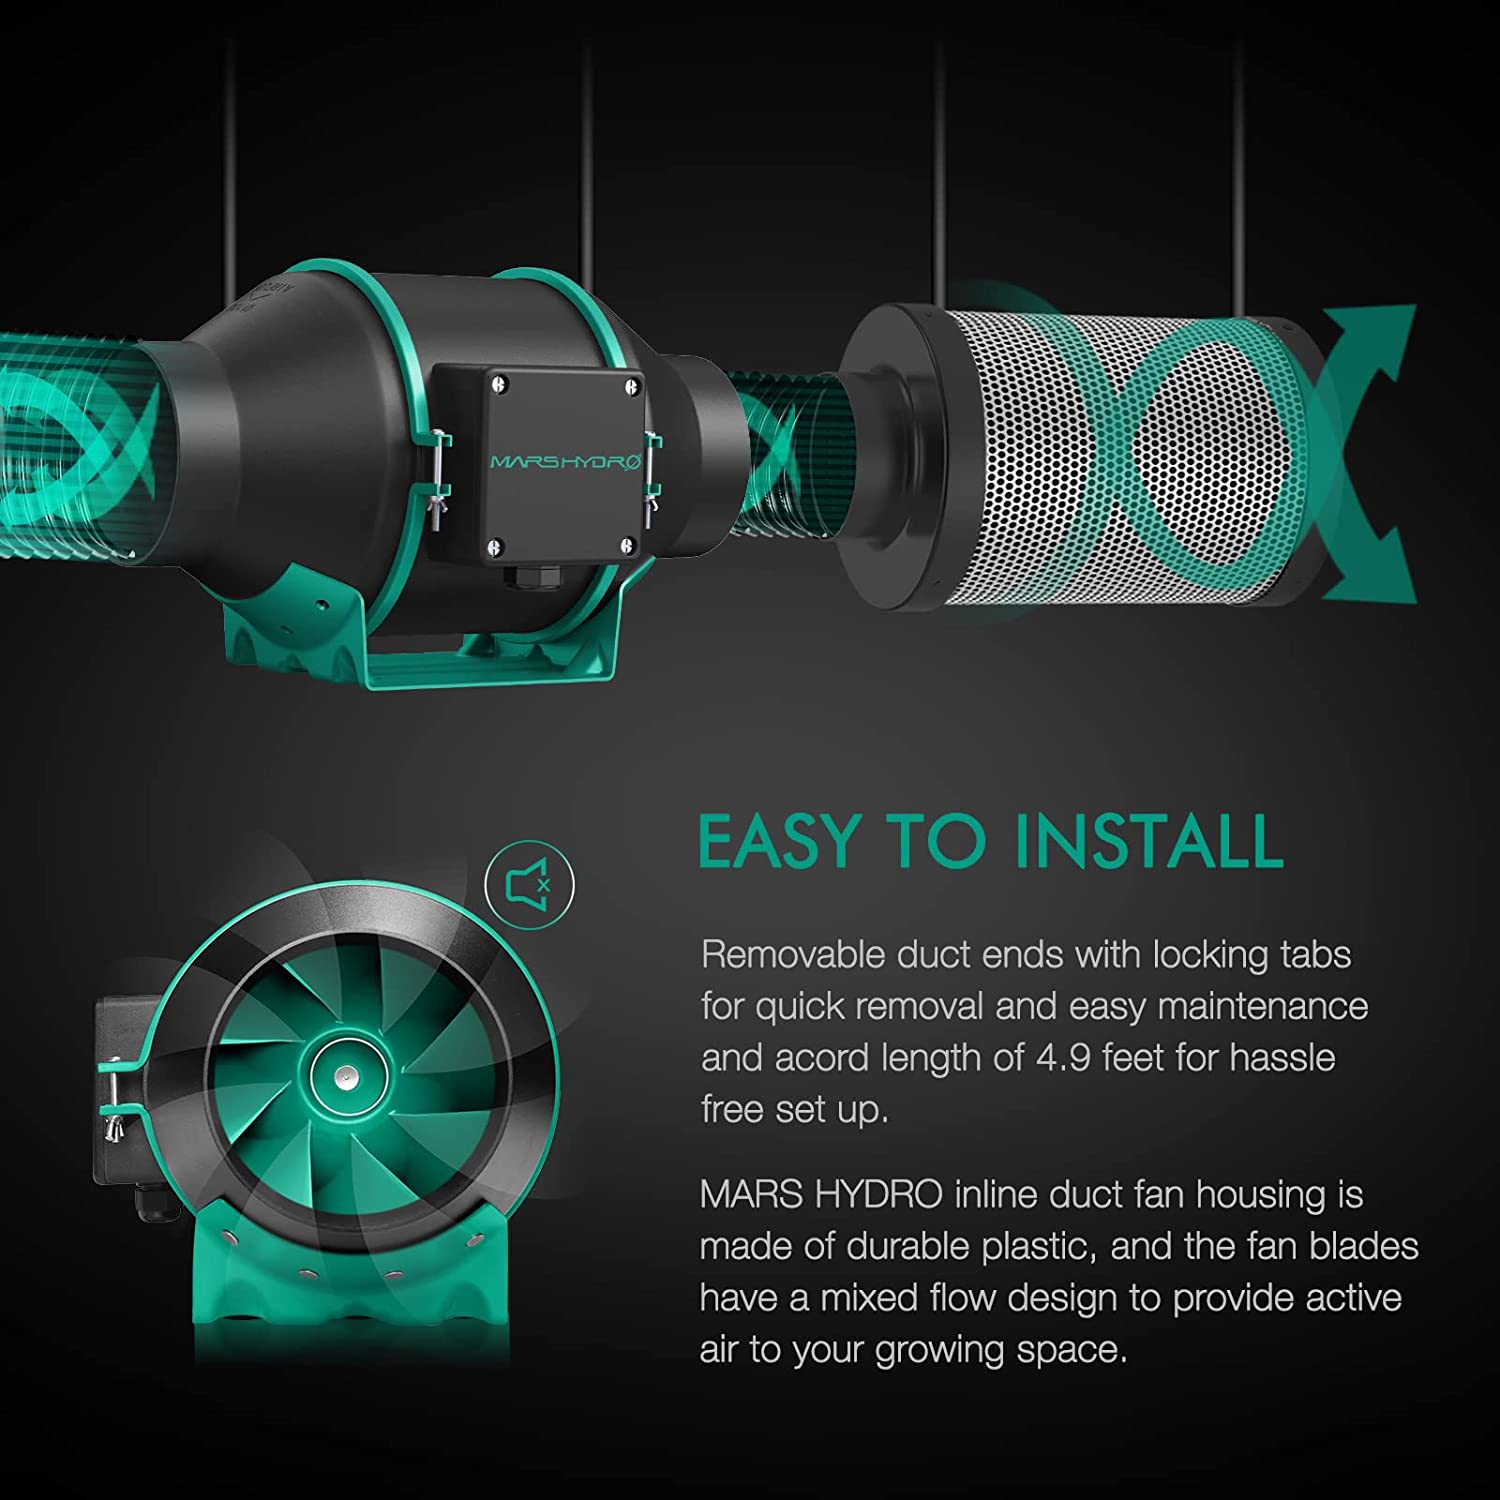 Mars Hydro TS 600 LED Grow Light Full Grow Kits+60x60x140cm Tent+Fan Carbon Filter IR